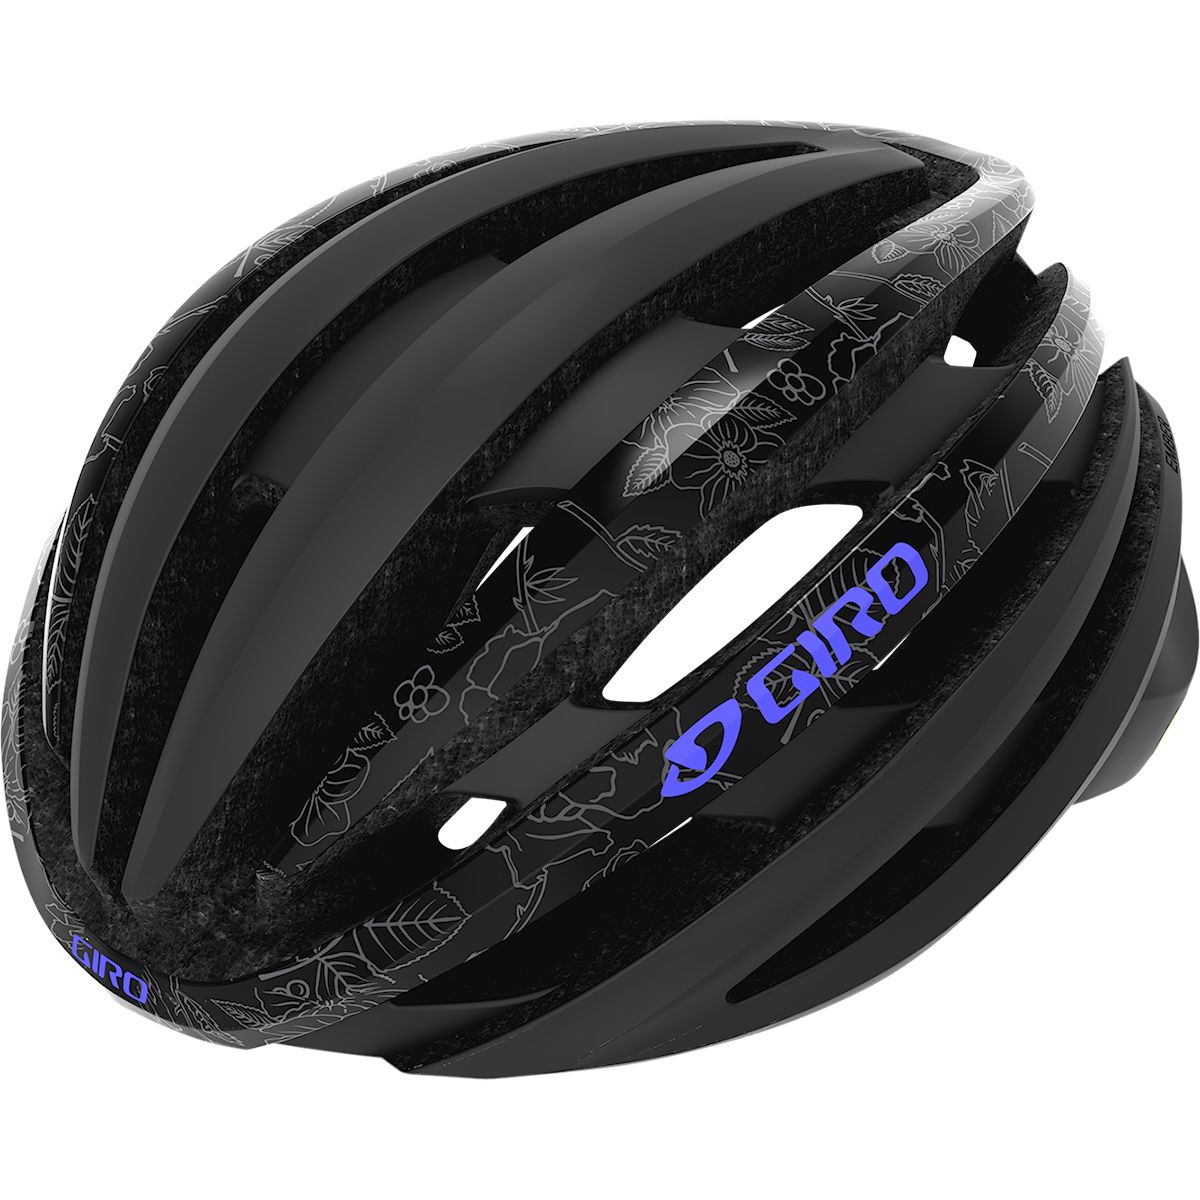 Giro Ember MIPS Helmet - Women's product image